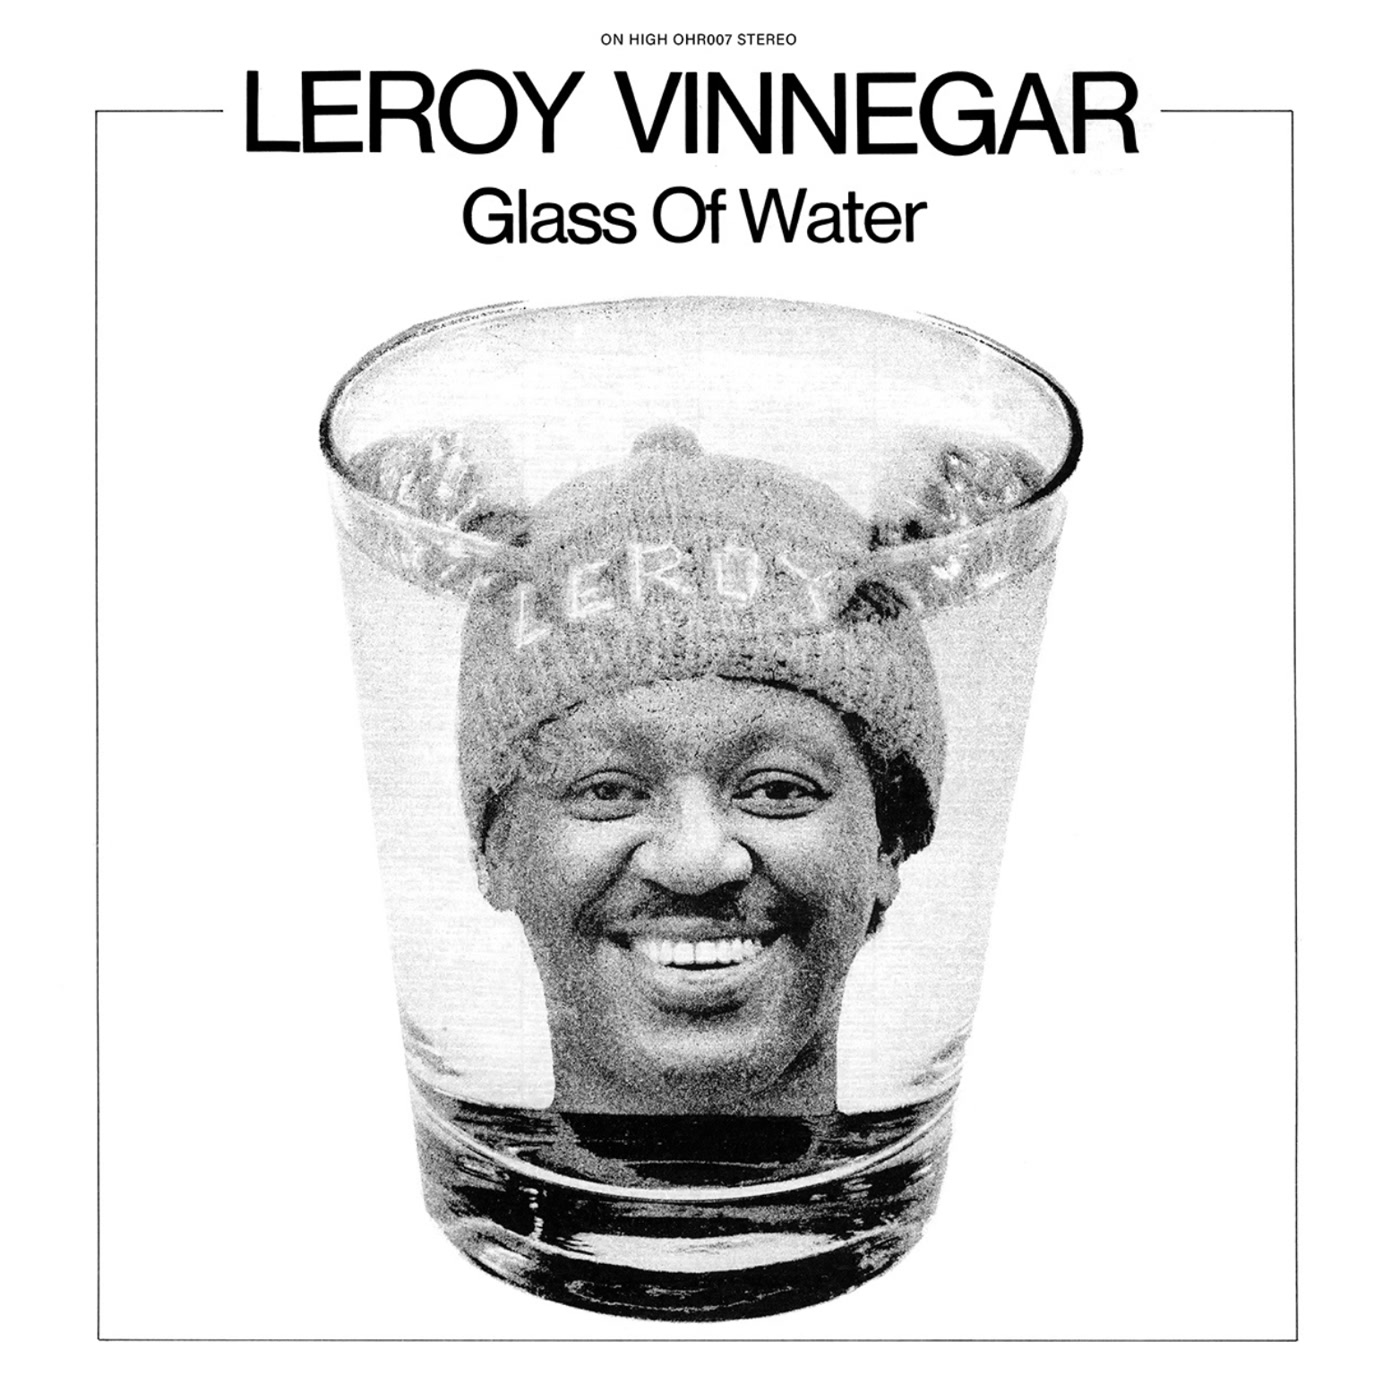 Leroy Vinnegar – Glass Of Water (On High Records)